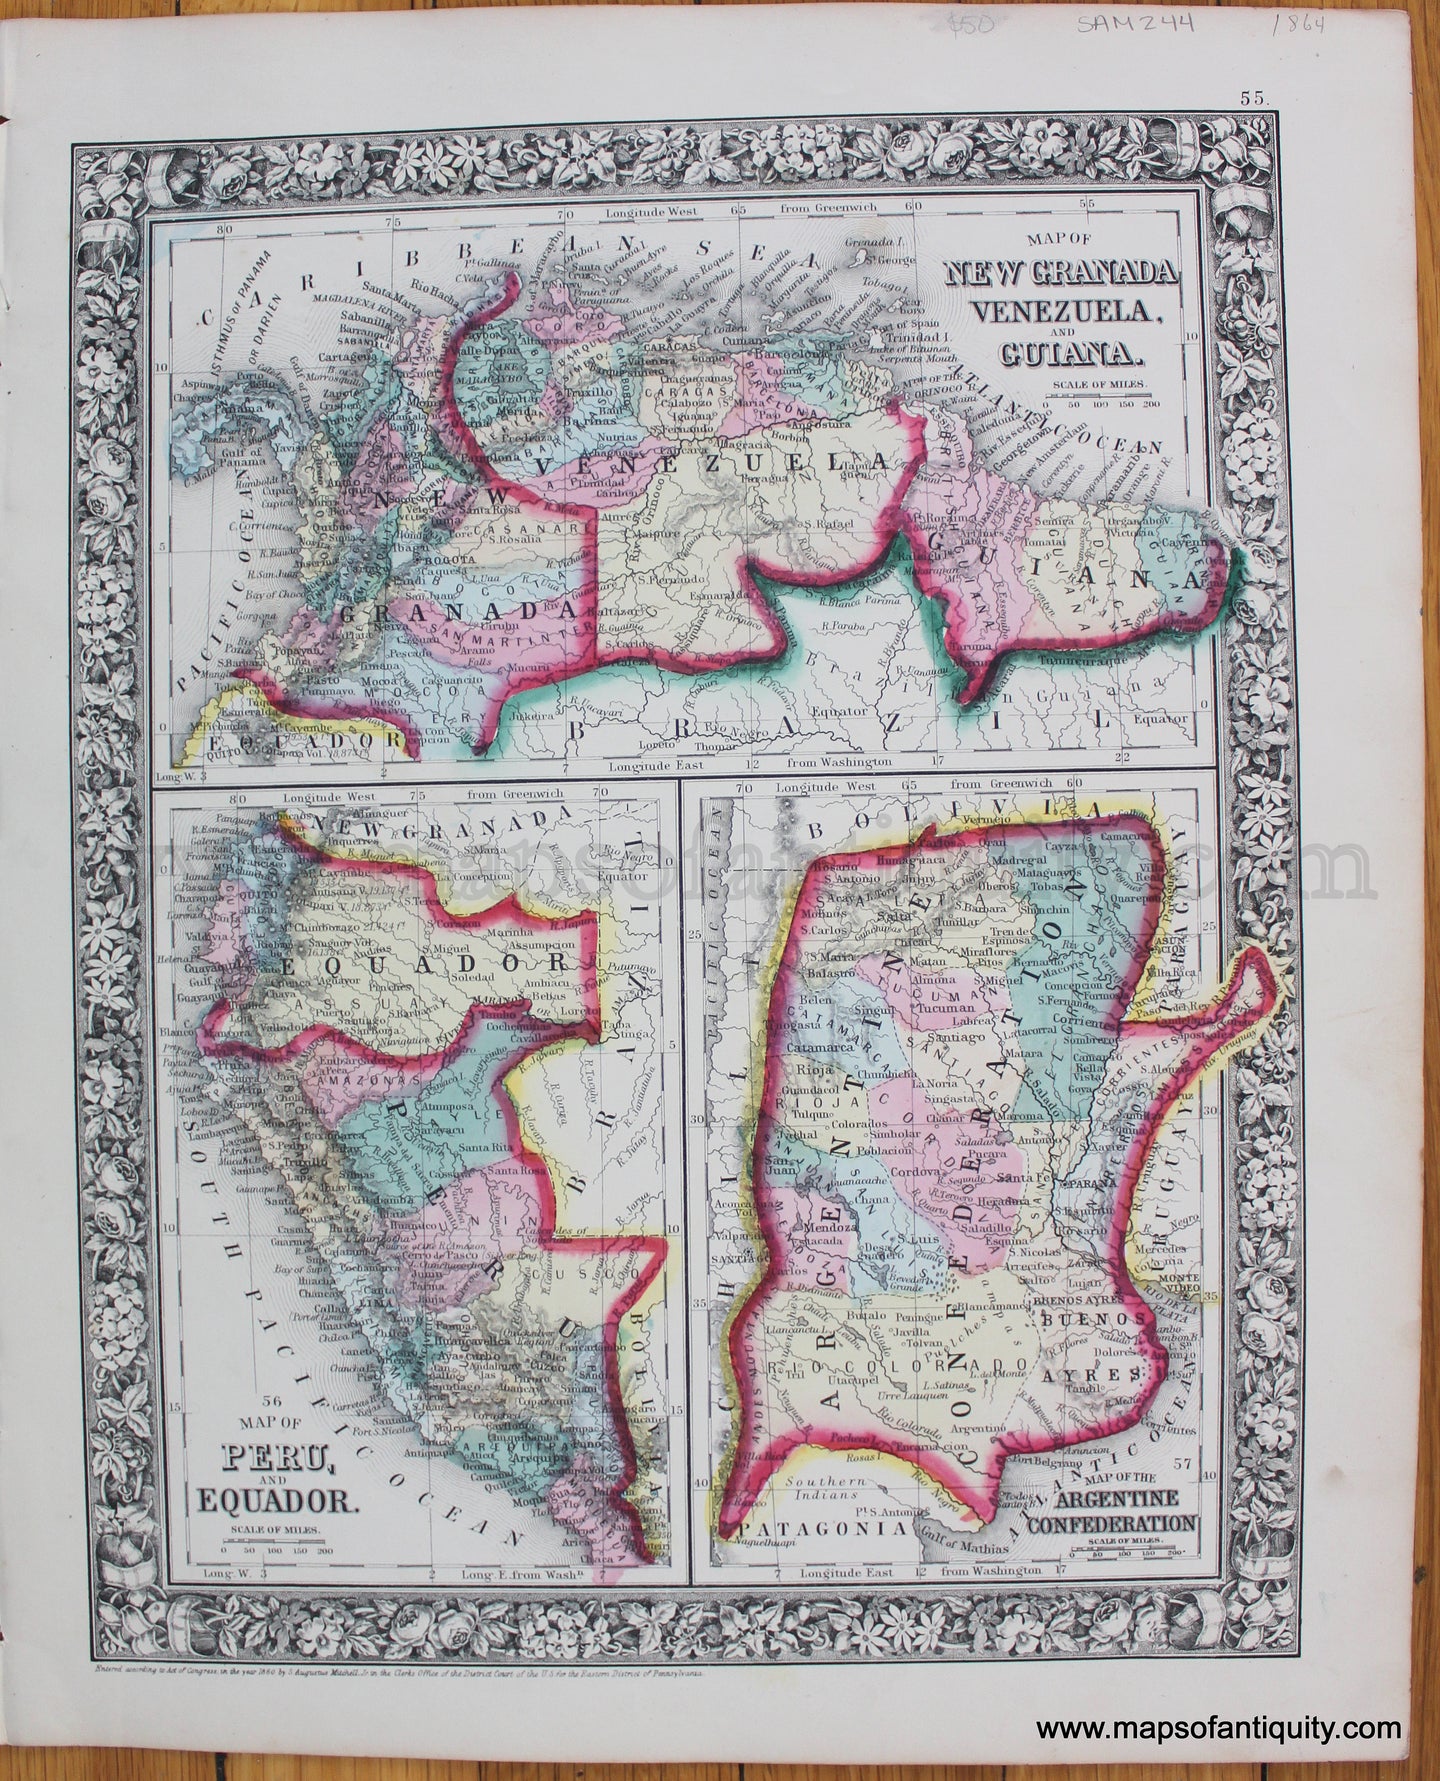 Map-of-New-Granada-Venezuela-Guiana-Peru-Equador-and-the-Argentine-Confederation.-1864-Mitchell-1860s-1800s-19th-century